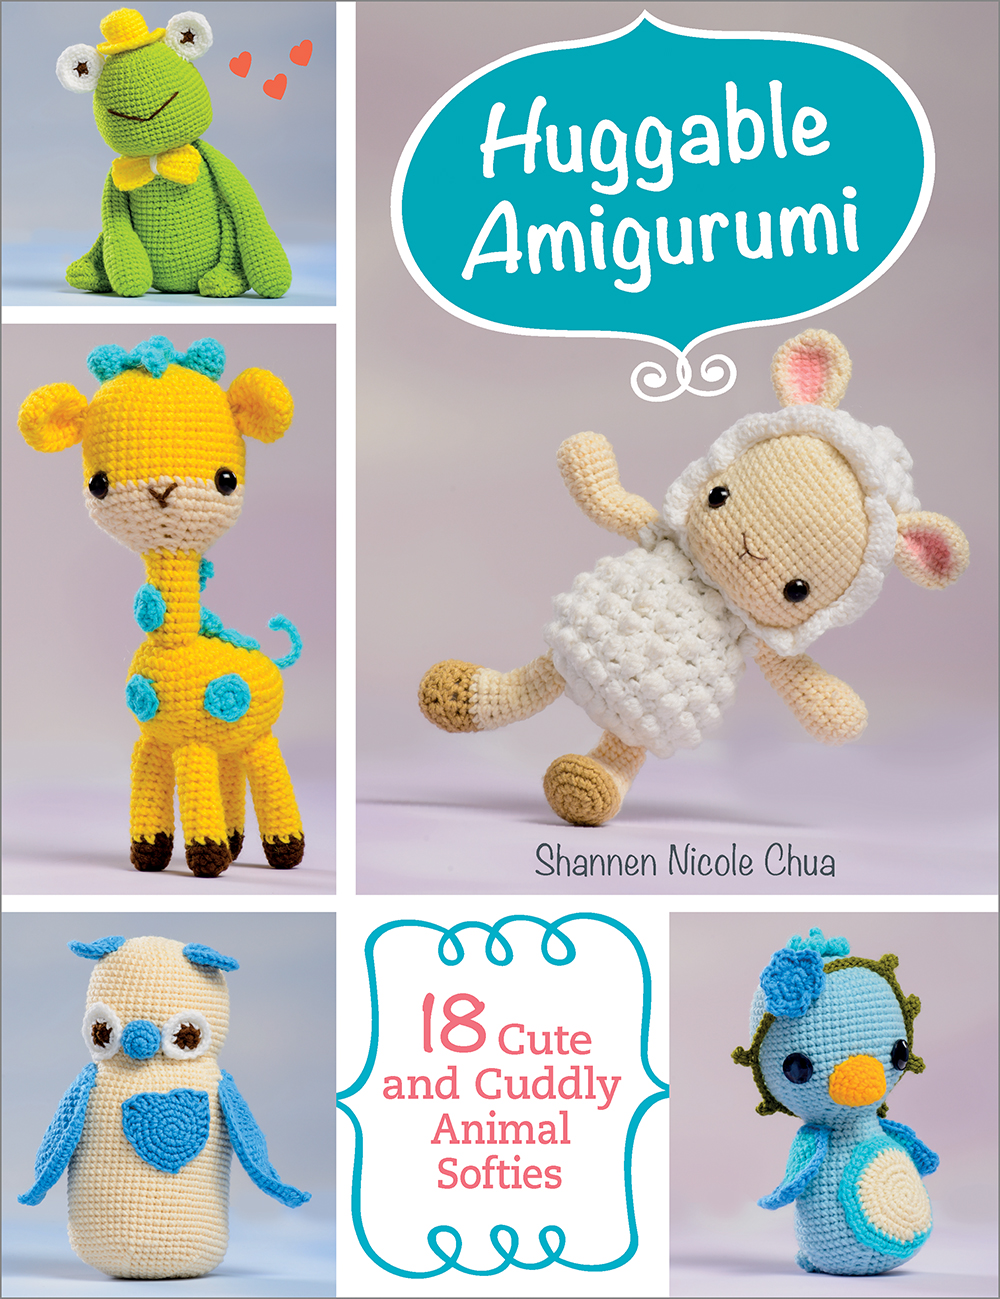 Huggable Amigurumi Book Giveaway | Top Crochet Patterns